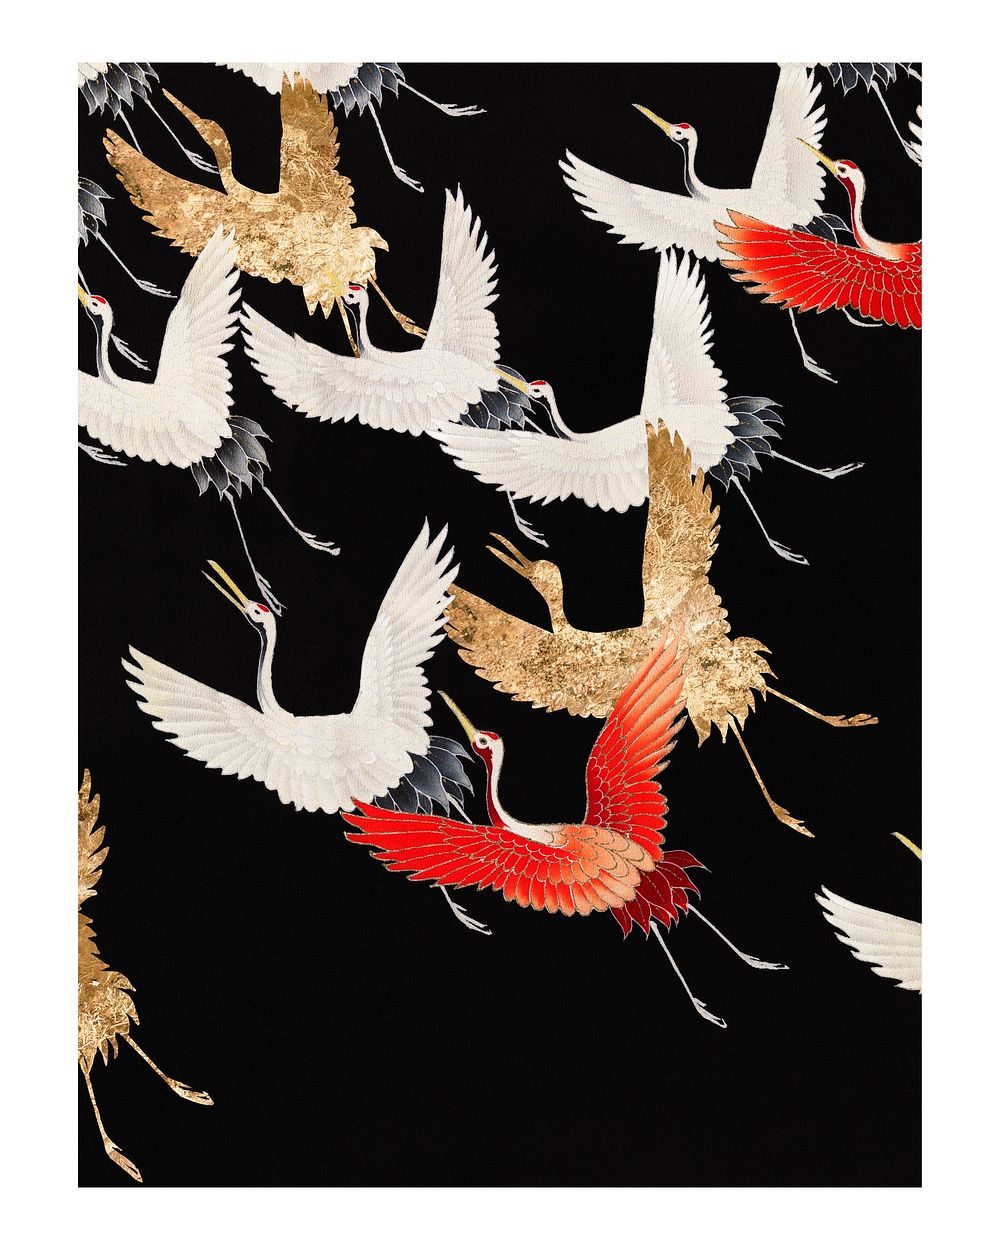 Japanese flying cranes vintage illustration wall art print and poster design remix from original artwork.